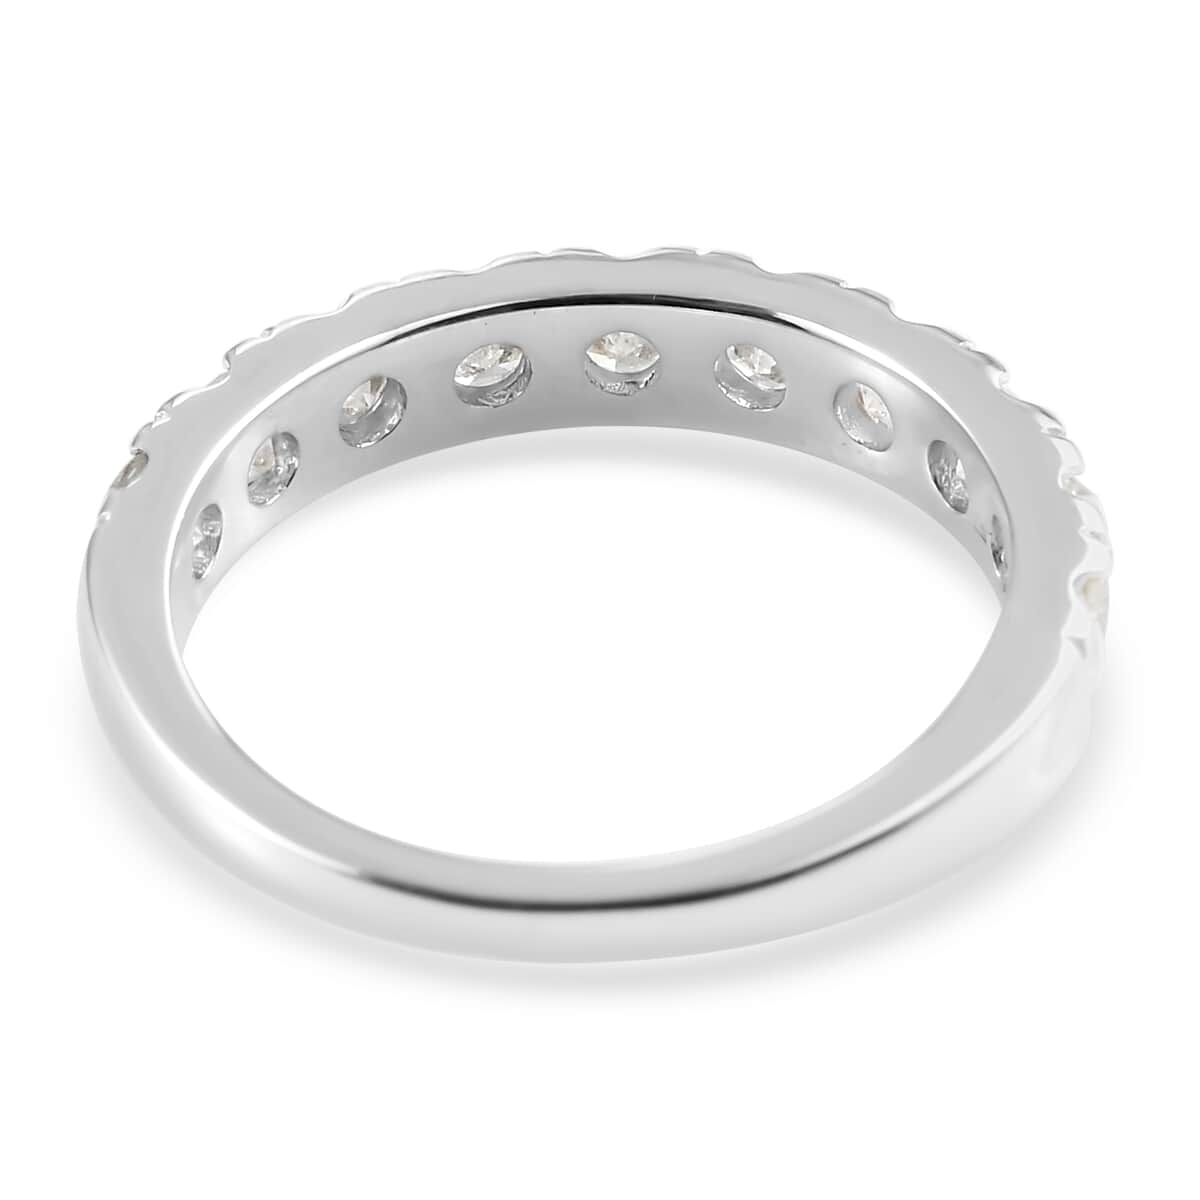 LUXORO 10K White Gold Diamond G-H I2 Band Ring (Size 6.0) 2.50 Grams 1.00 ctw image number 4